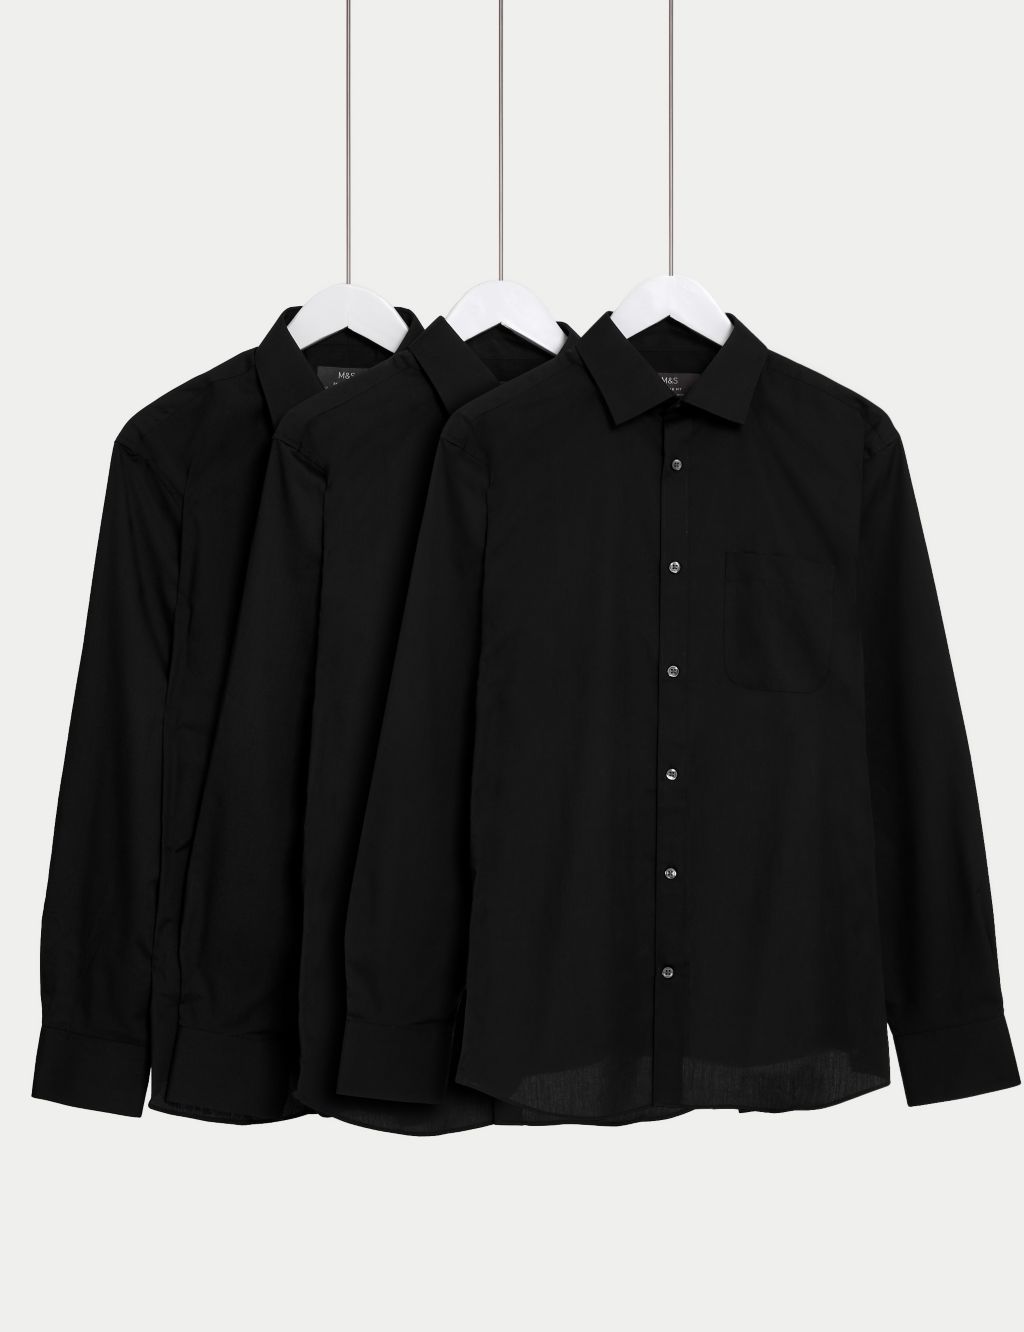 Men's Black Shirts | M&S